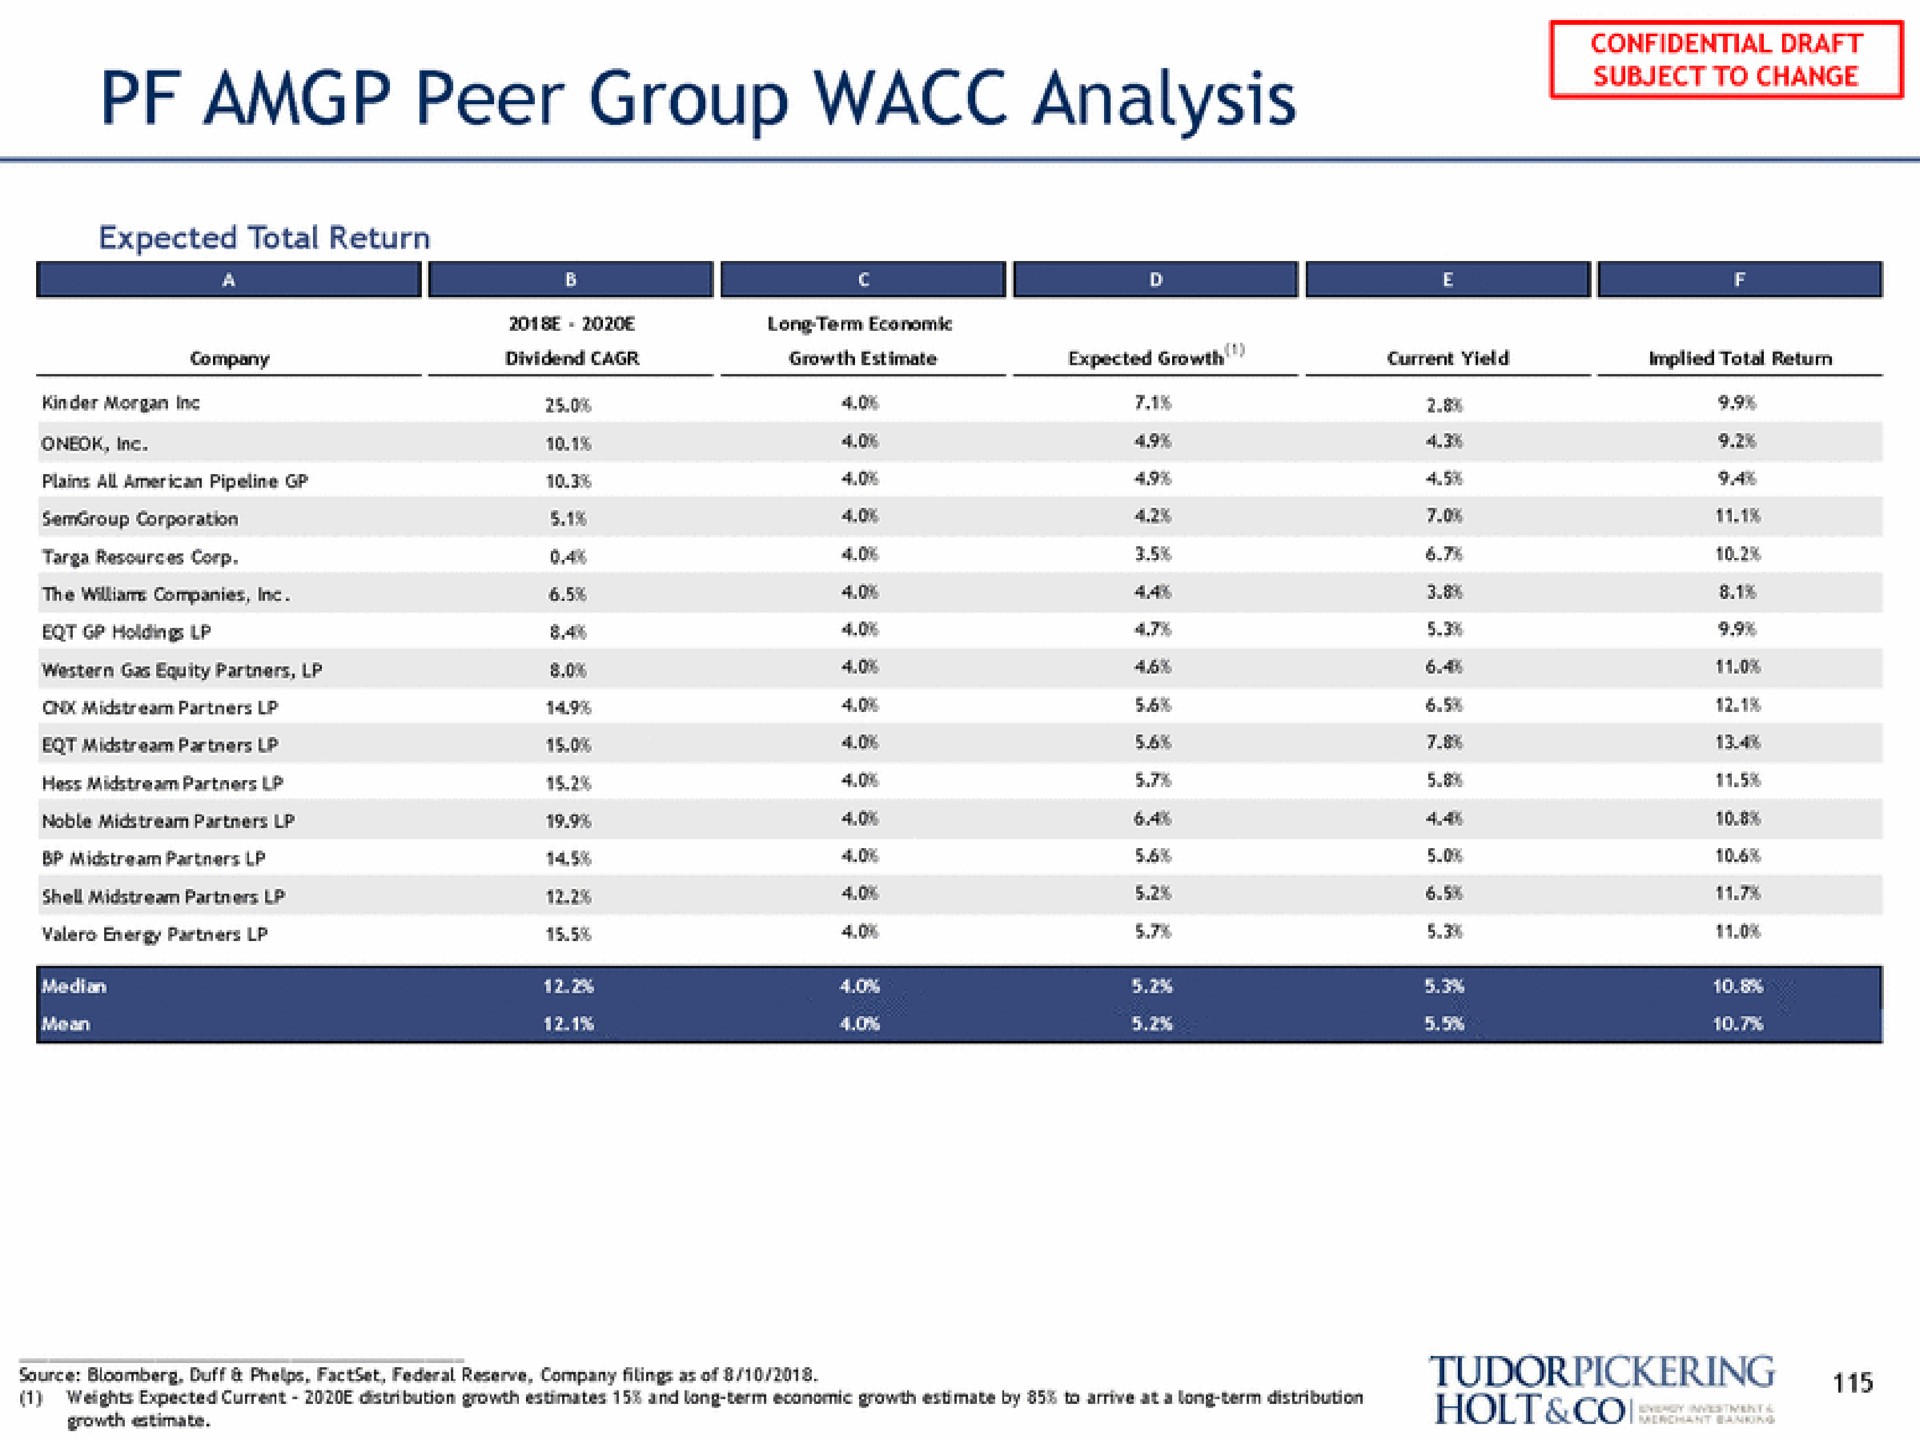 peer group analysis lee | Tudor, Pickering, Holt & Co